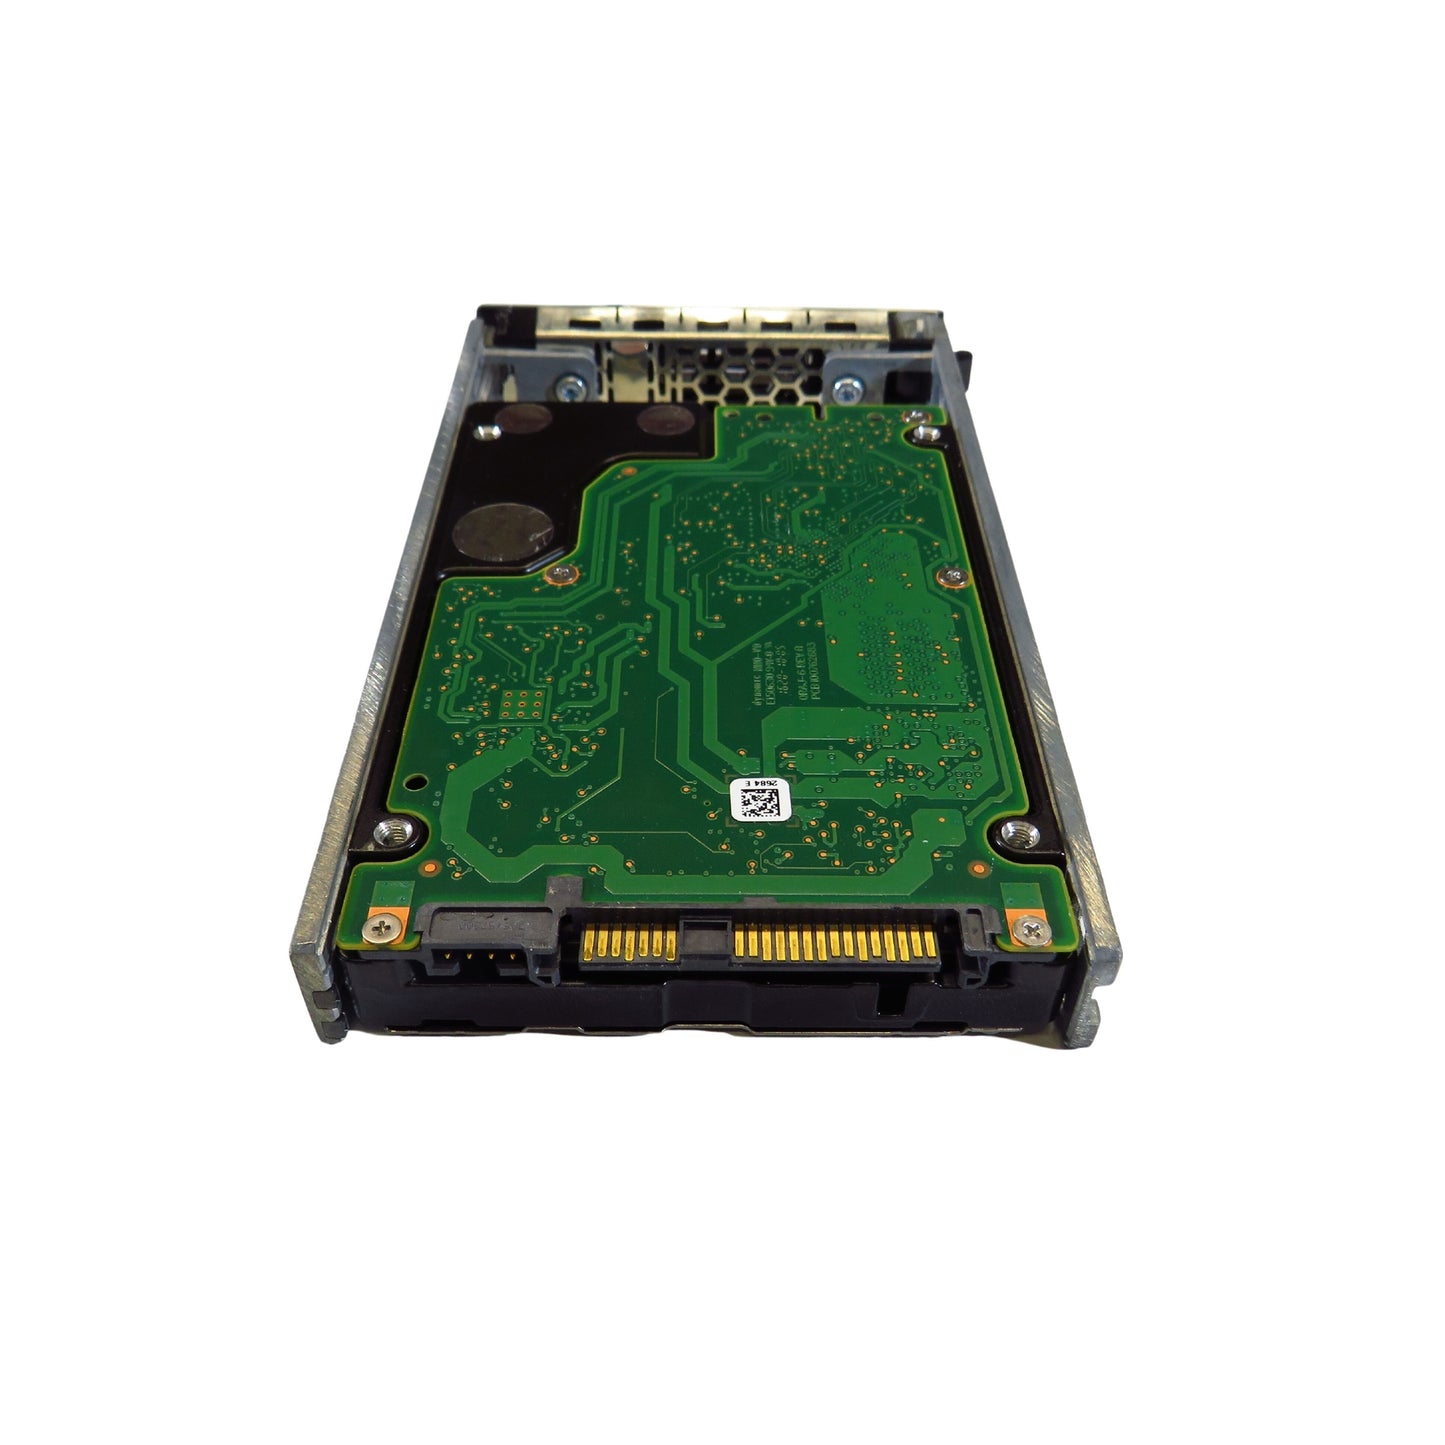 Dell EqualLogic RWV5D 1.2TB 10K RPM 2.5" SAS 12Gbps HDD Hard Drive (Refurbished)